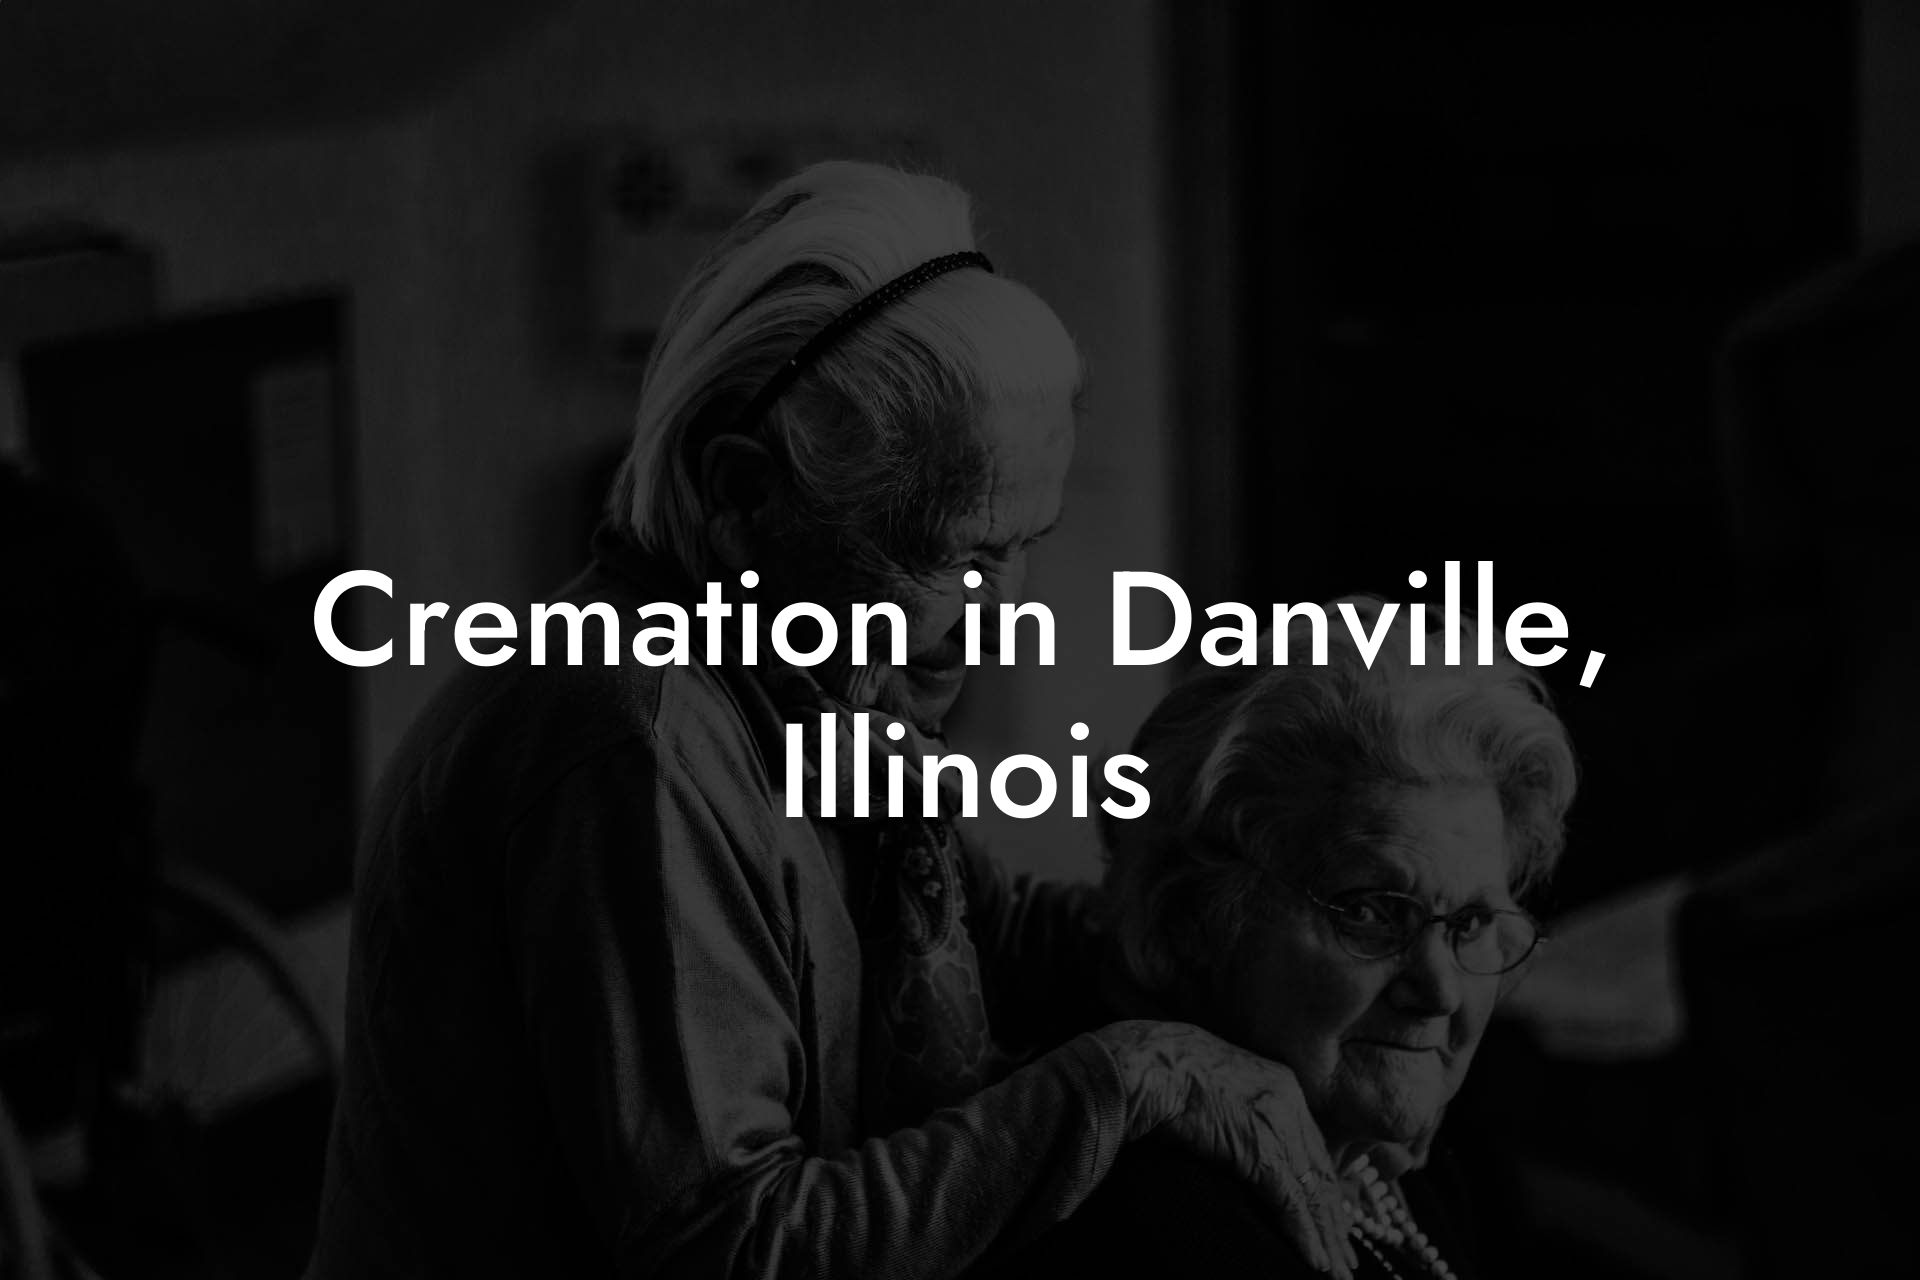 Cremation in Danville, Illinois